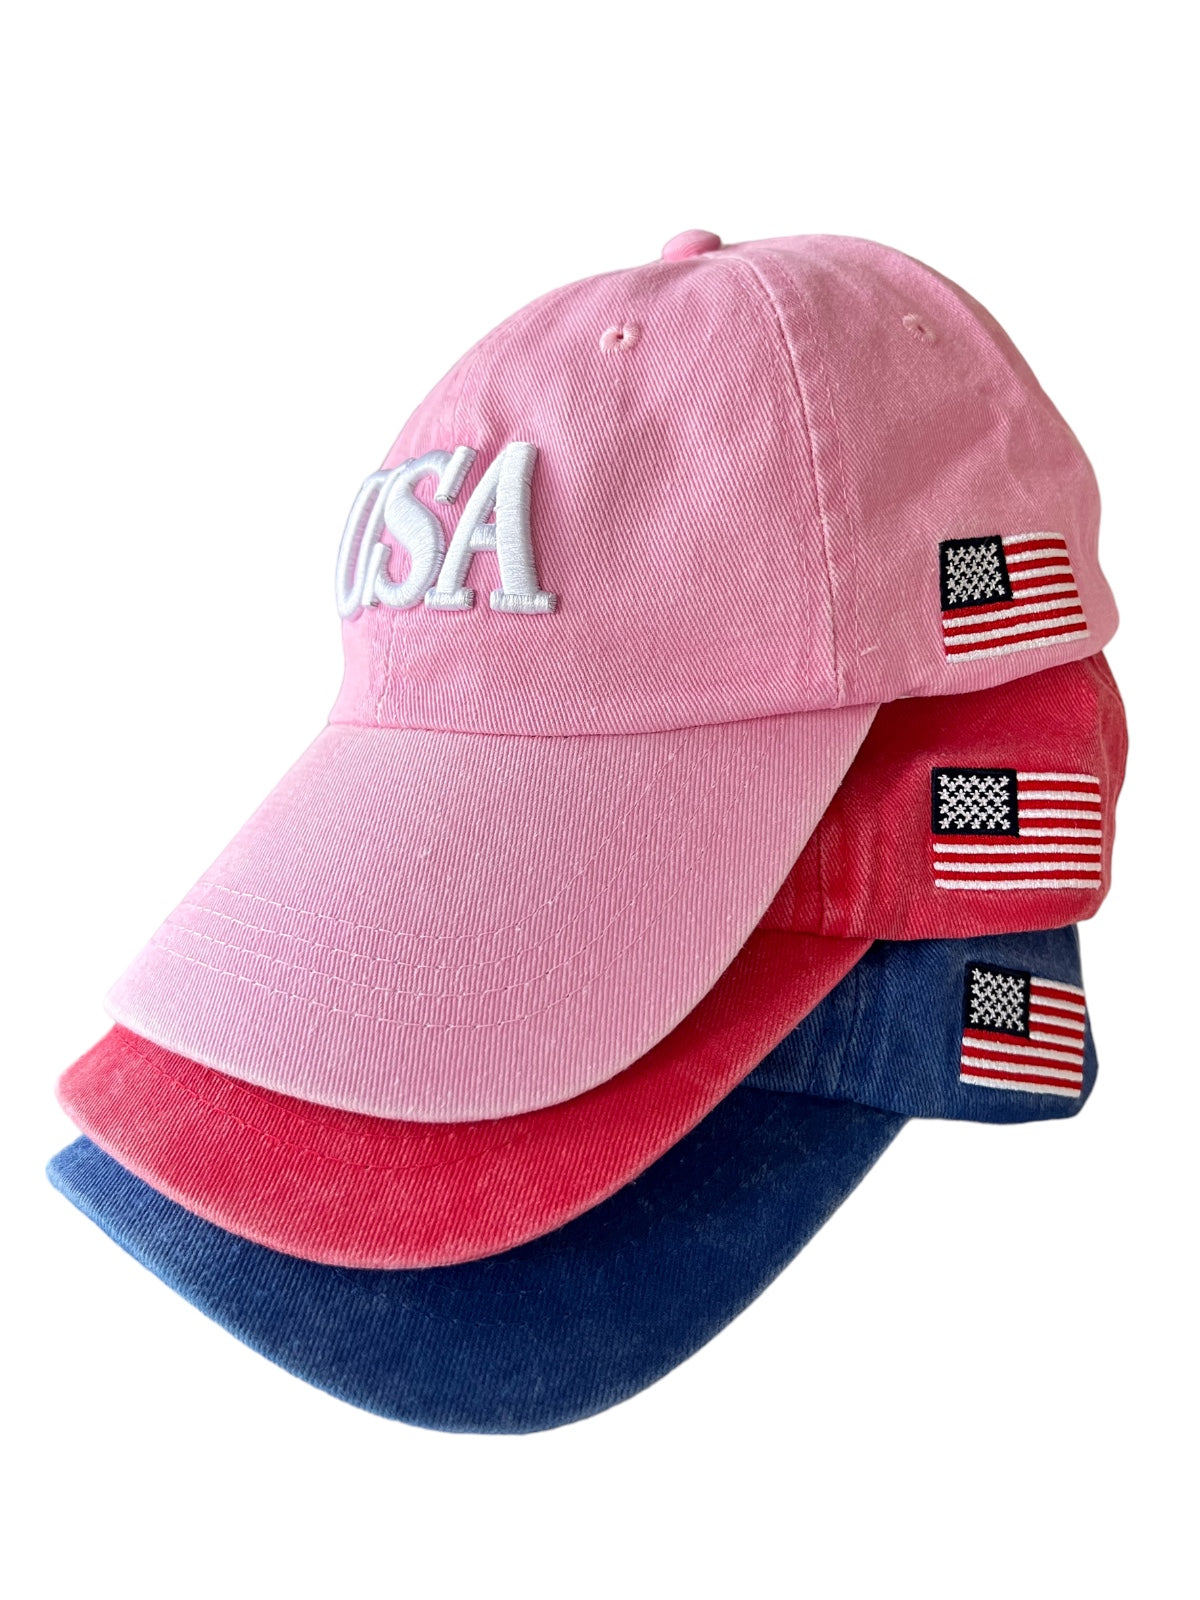 USA Adult Baseball Hat, Vintage Blue